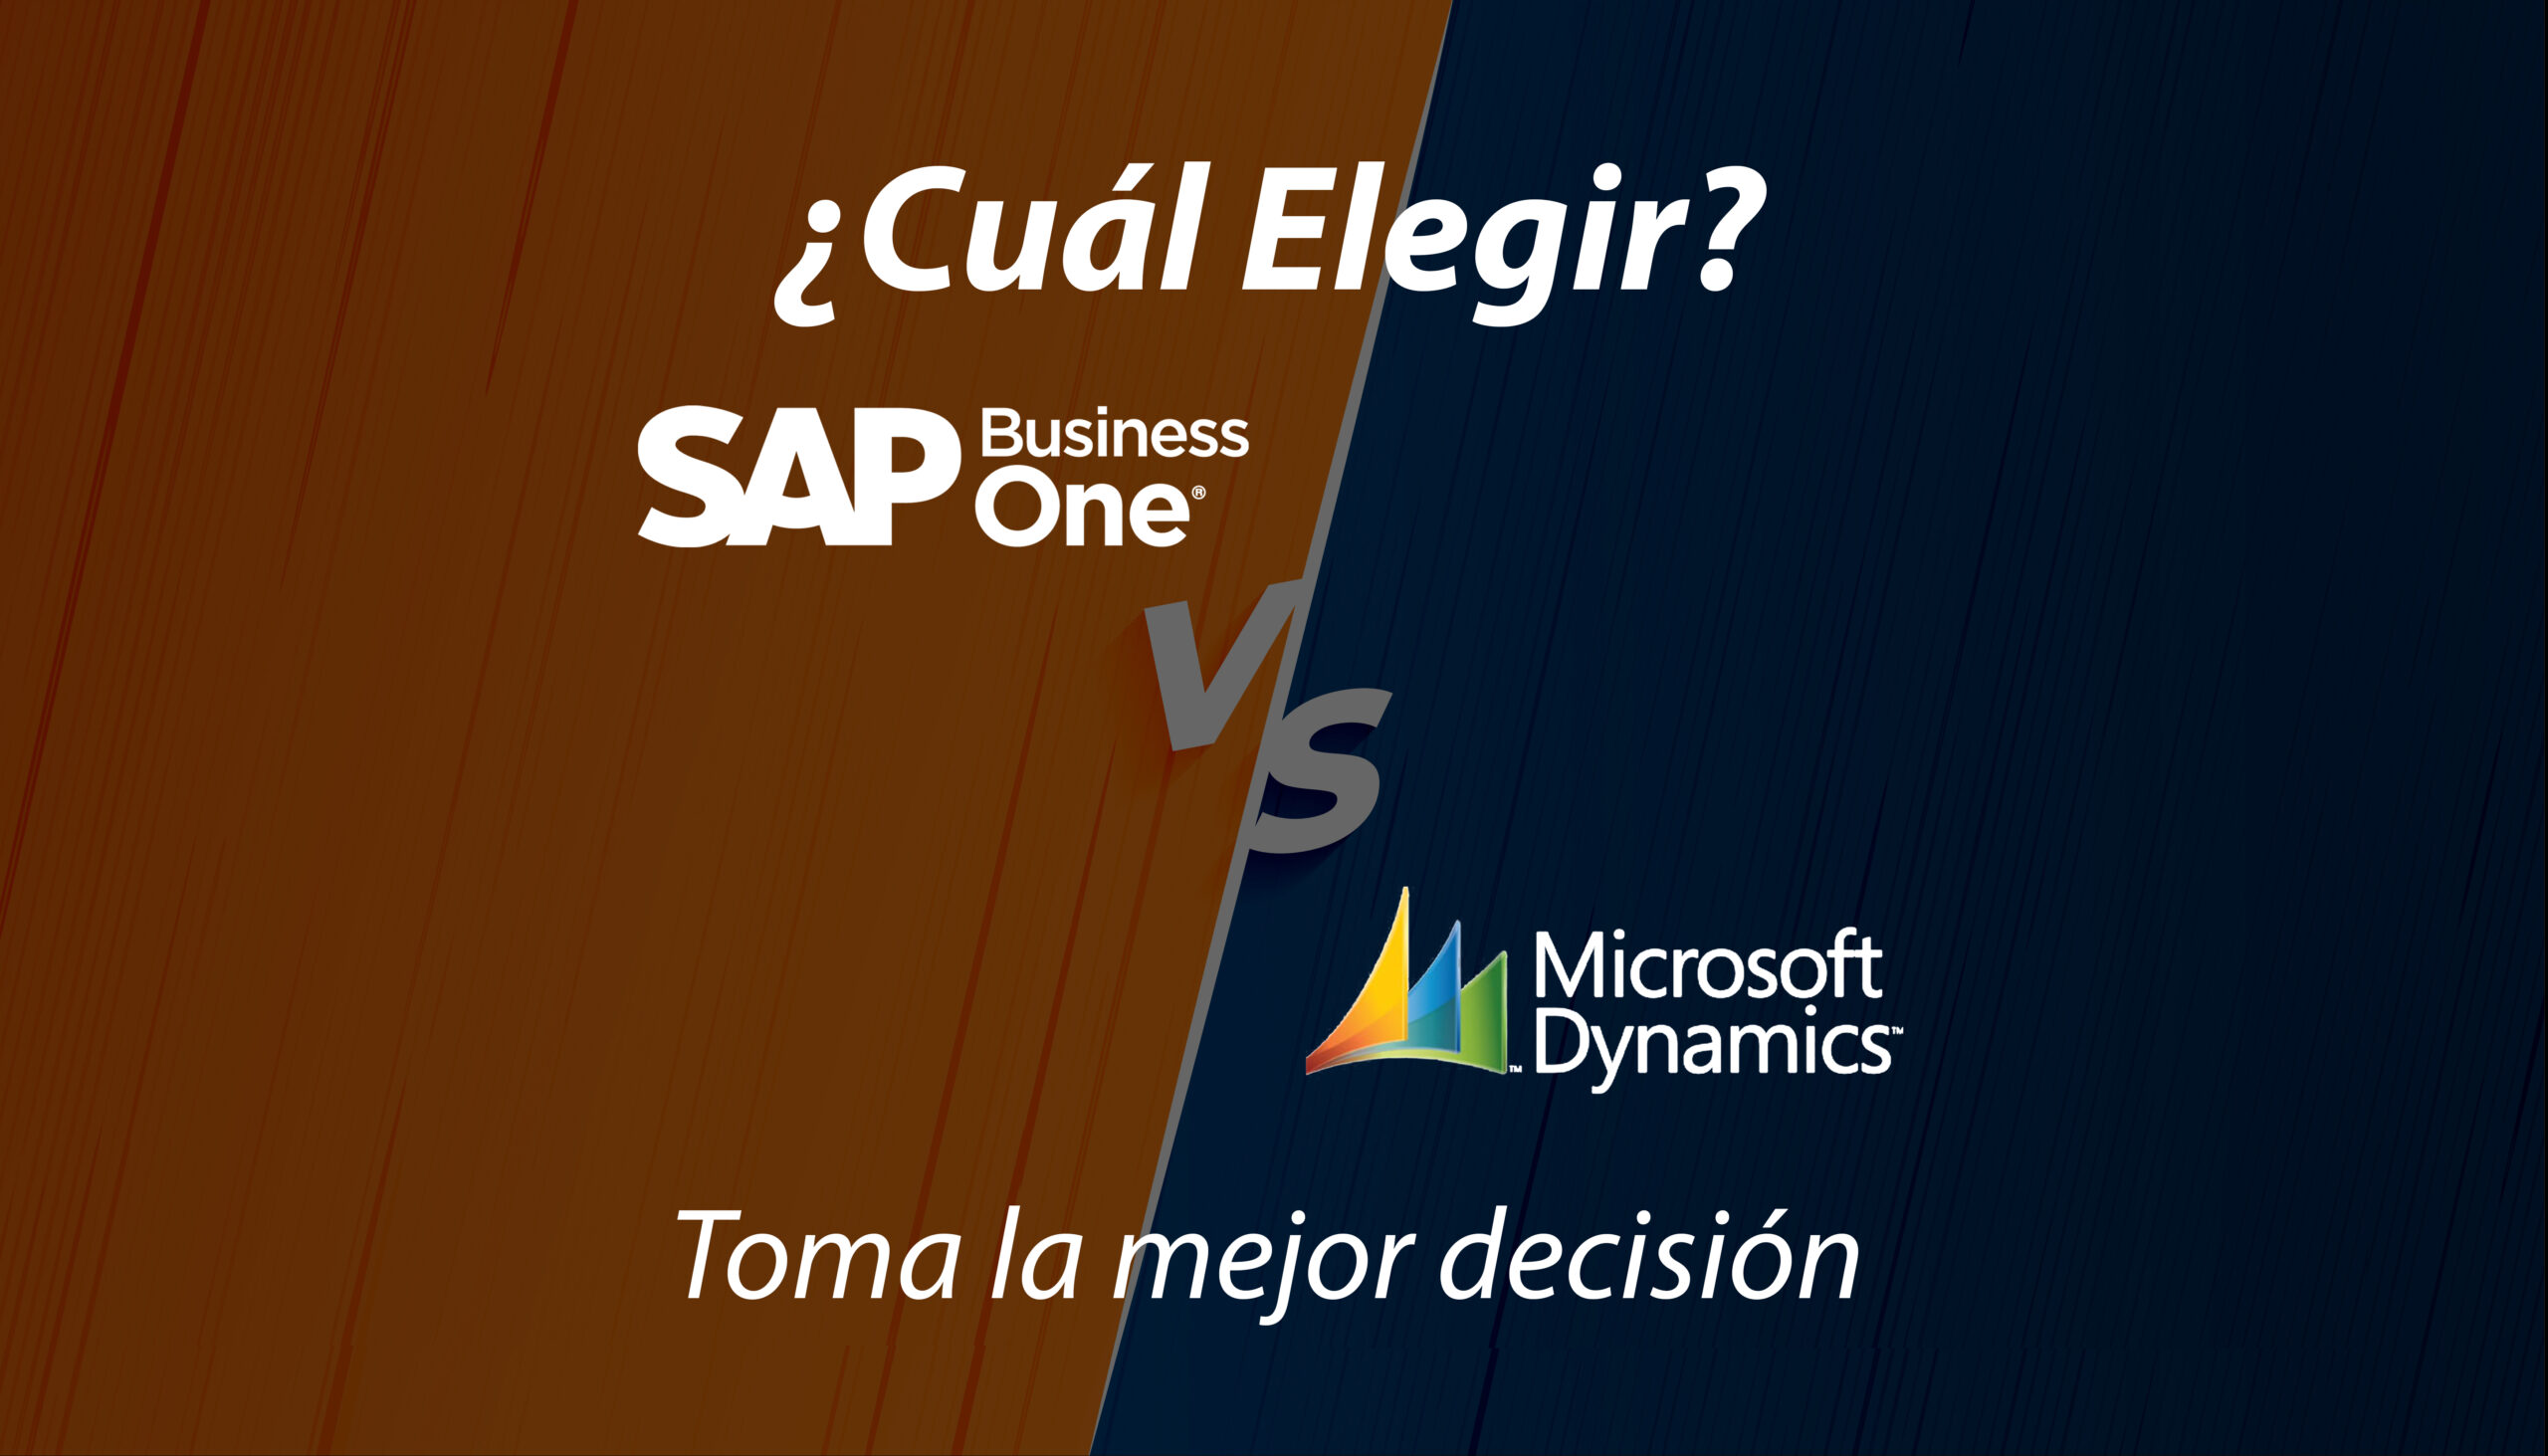 SAP Business One vs Microsoft Dynamics